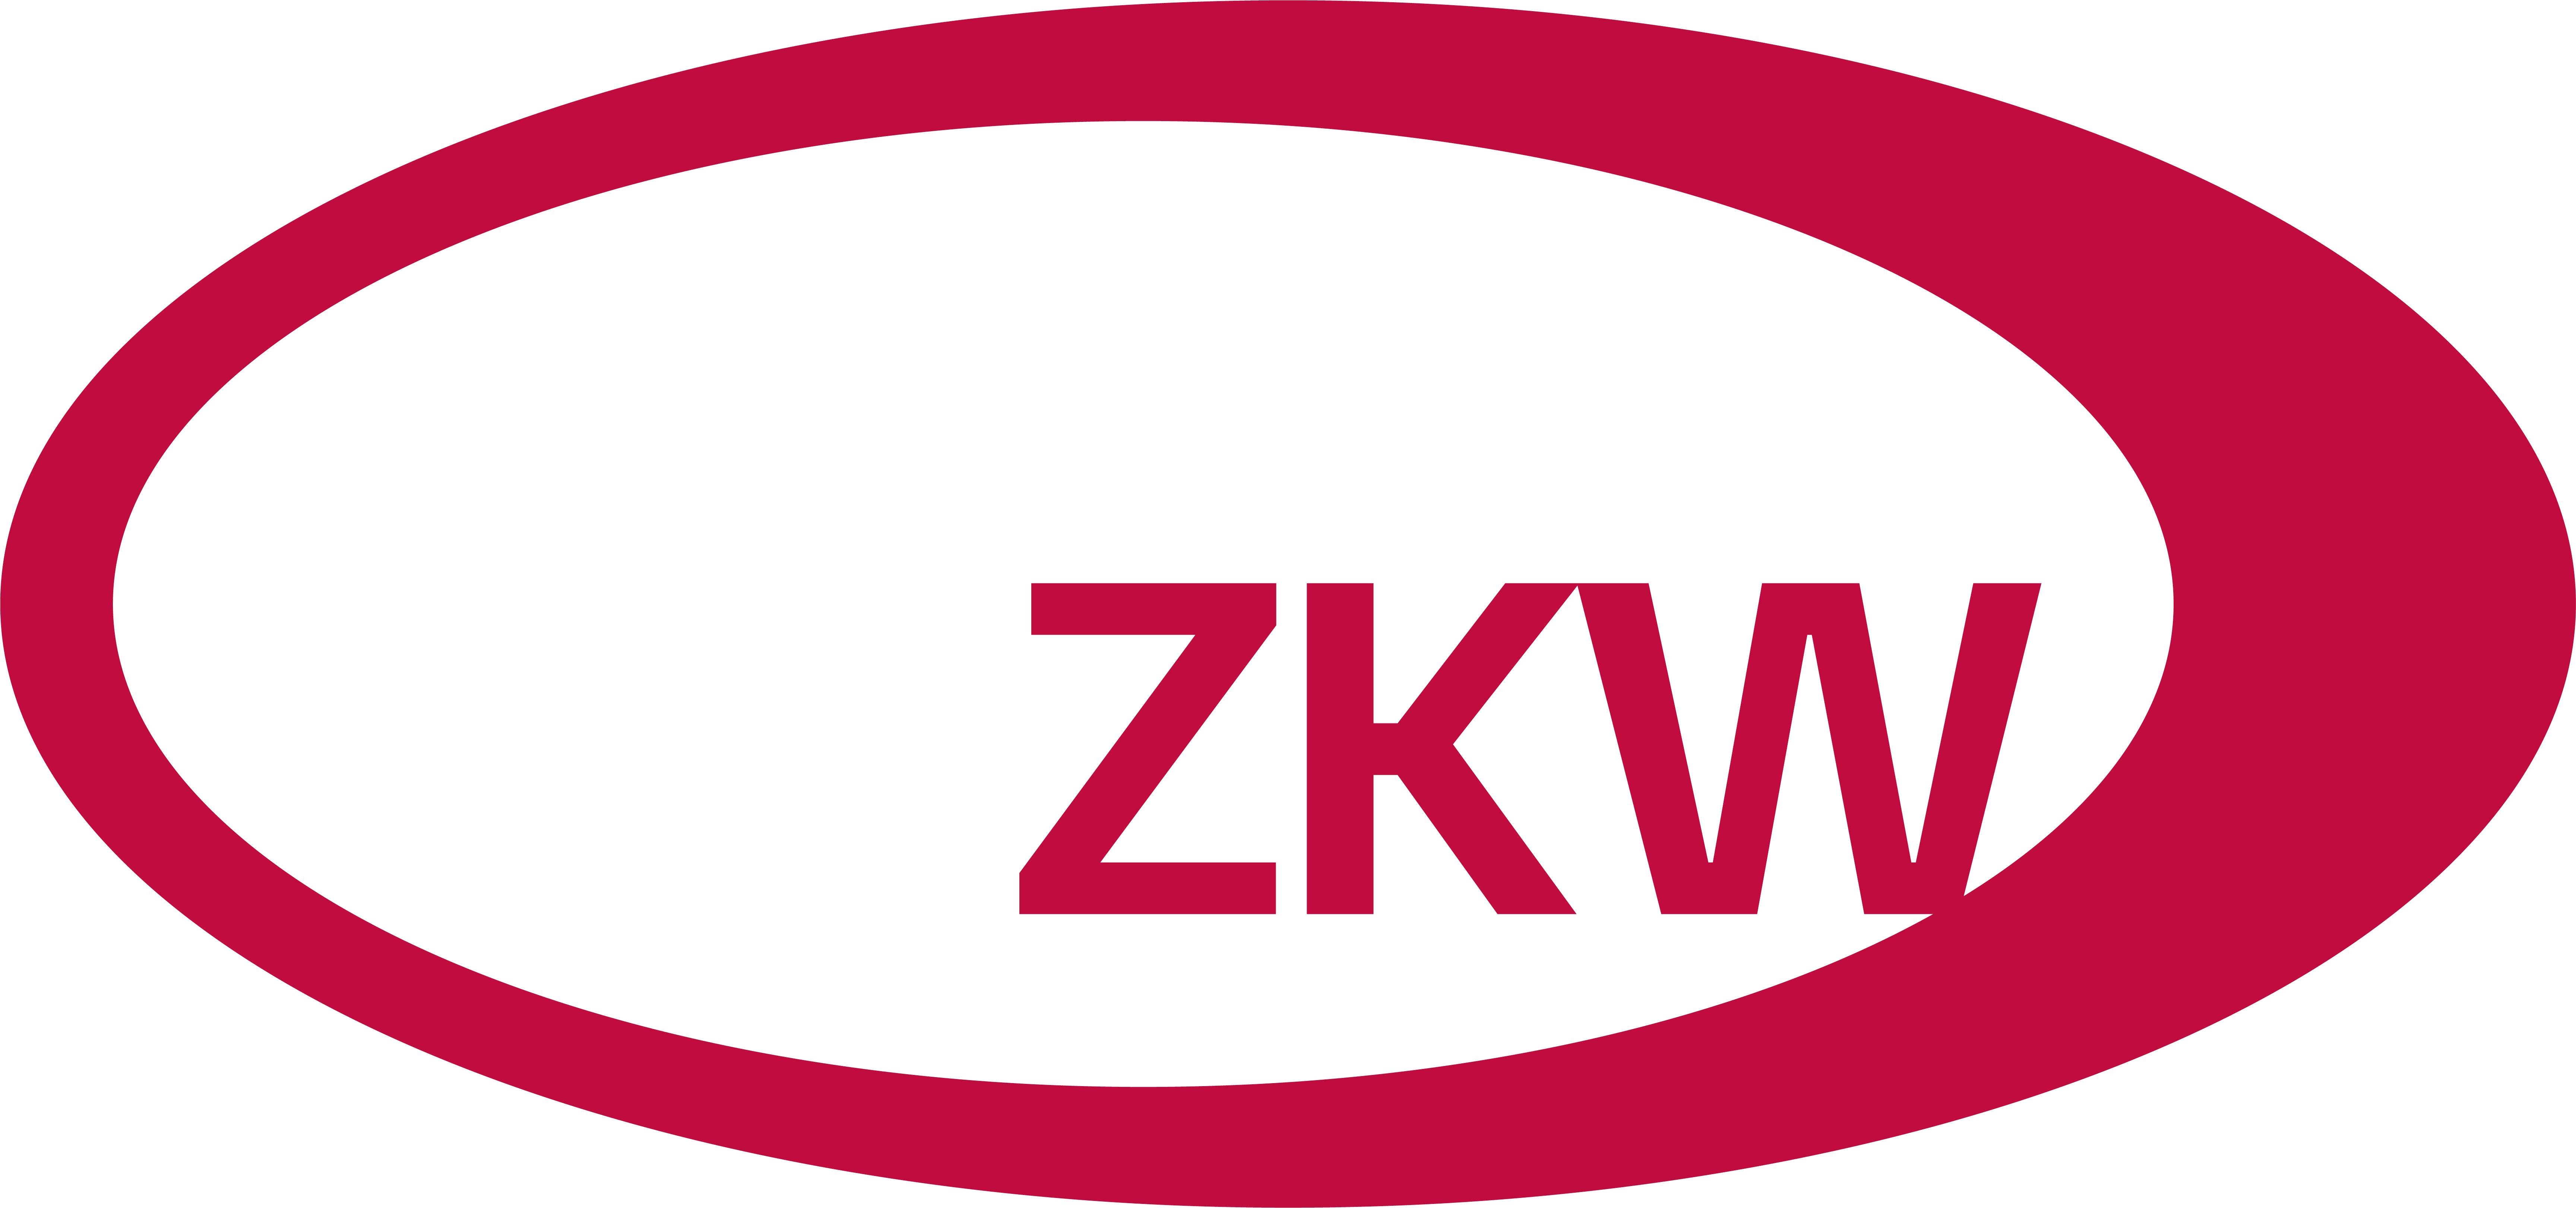 ZKW Slovakia, s.r.o.